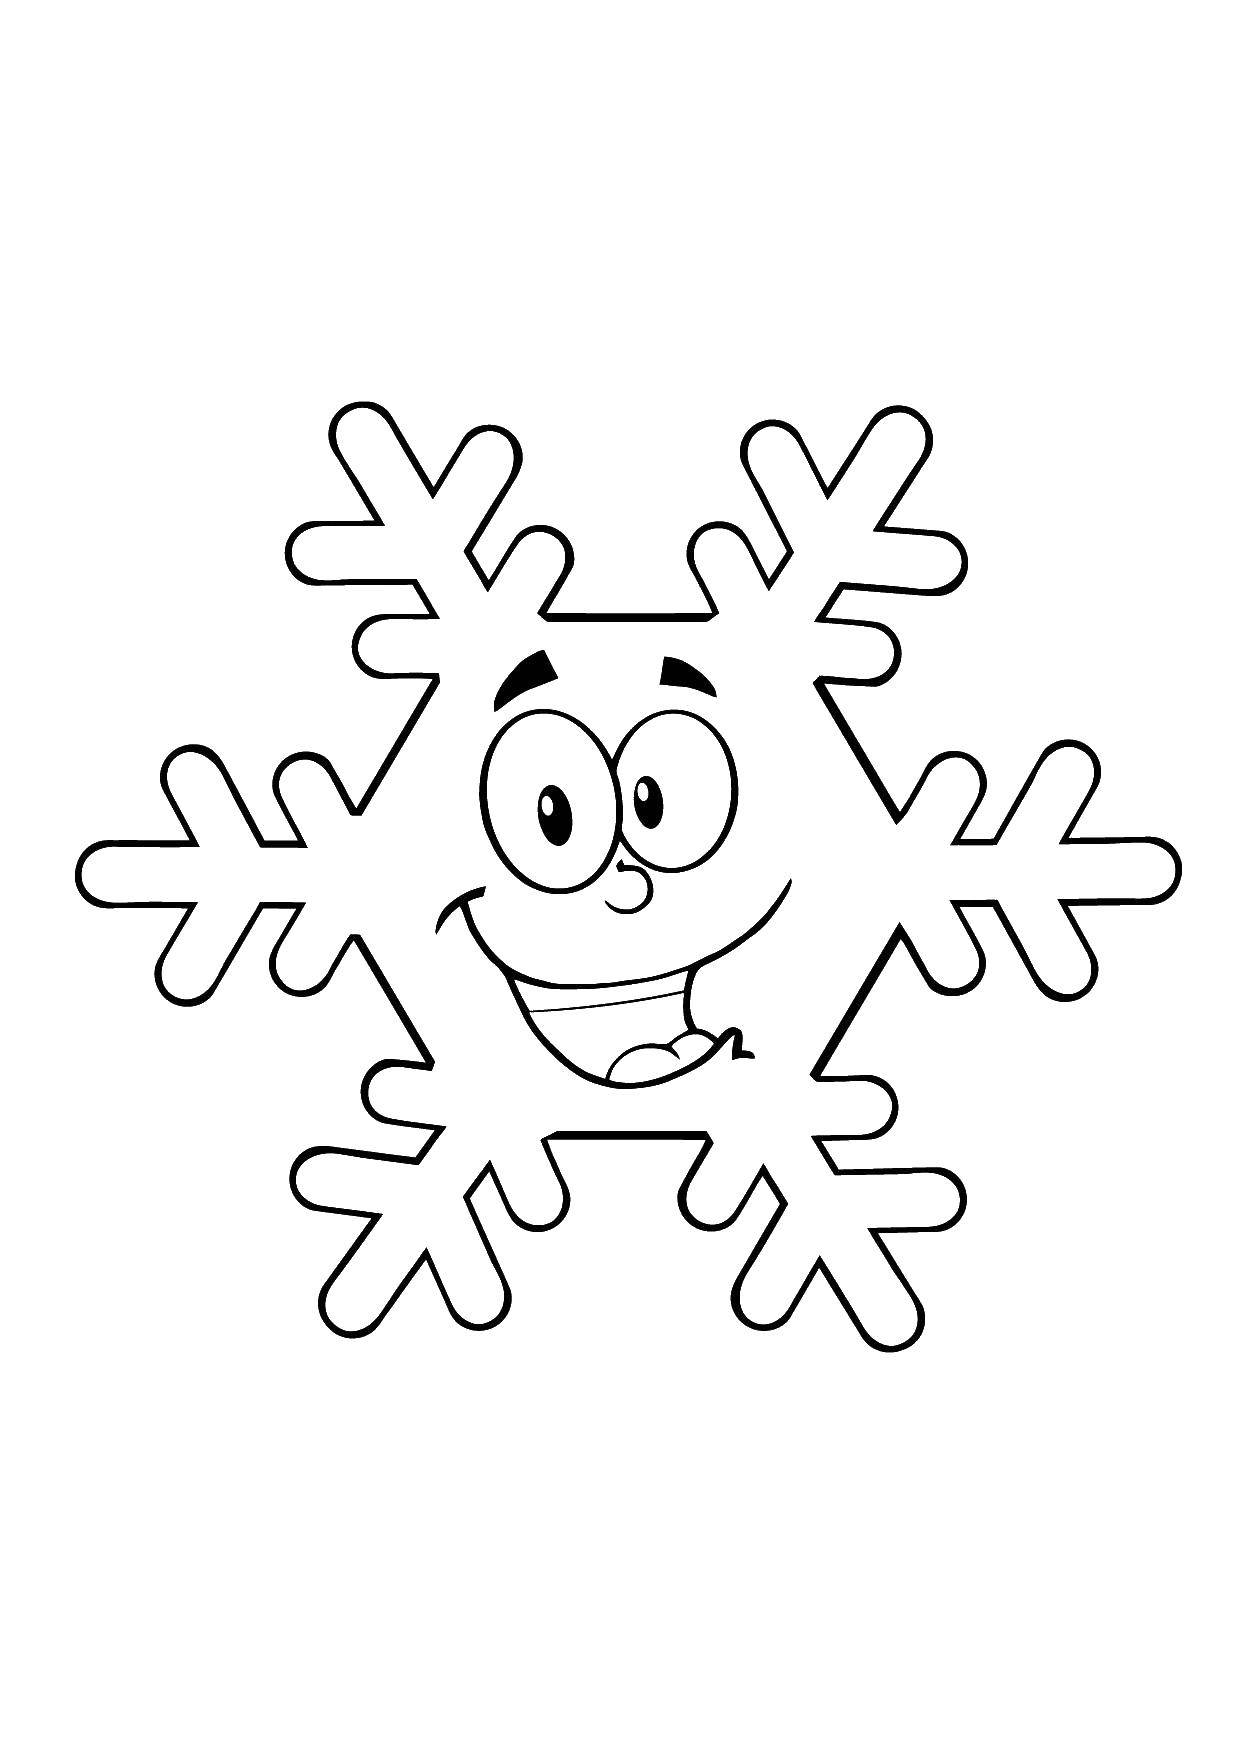 Coloring Fun snowflake. Category snowflakes. Tags:  Snowflakes, snow, winter.